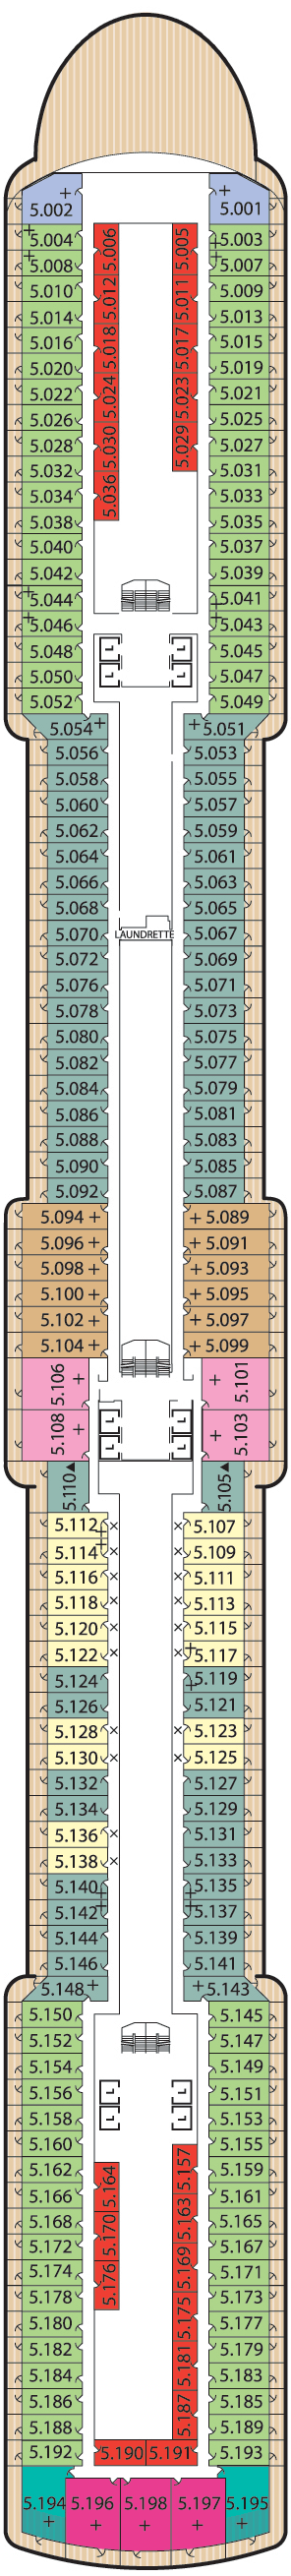 Deck Five Deck Plan